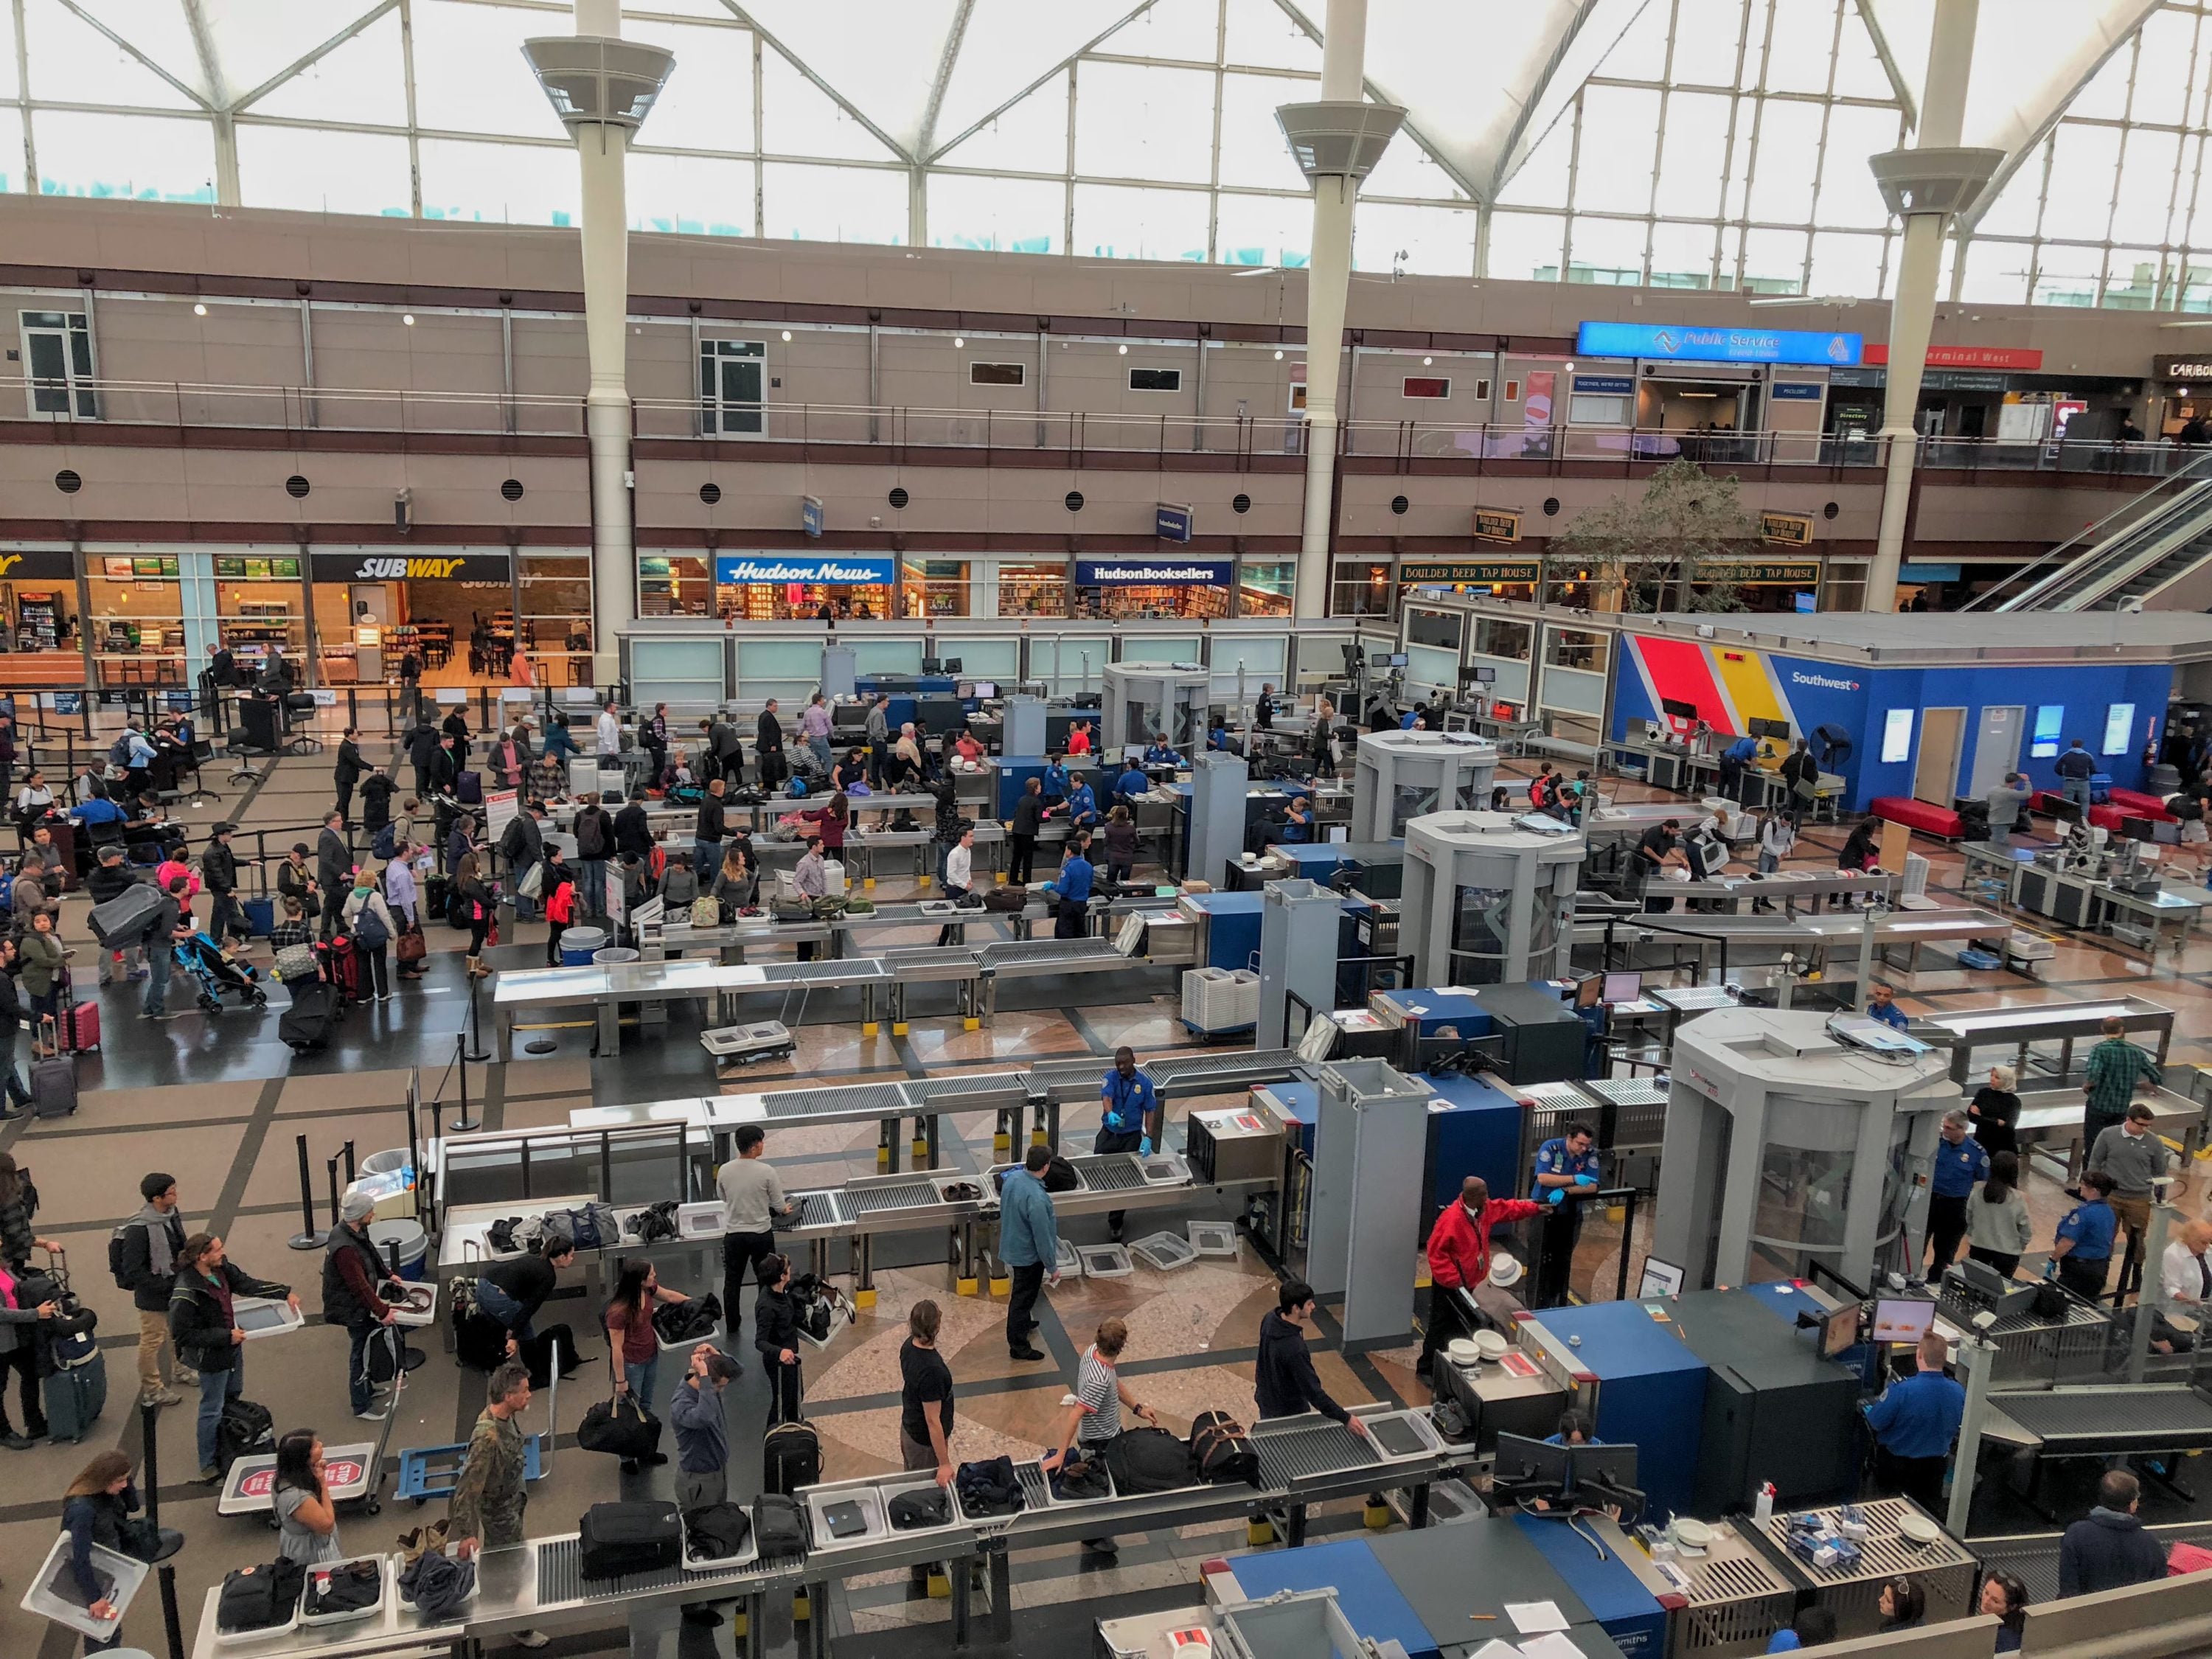 TSA Security Line at Denver International Airport